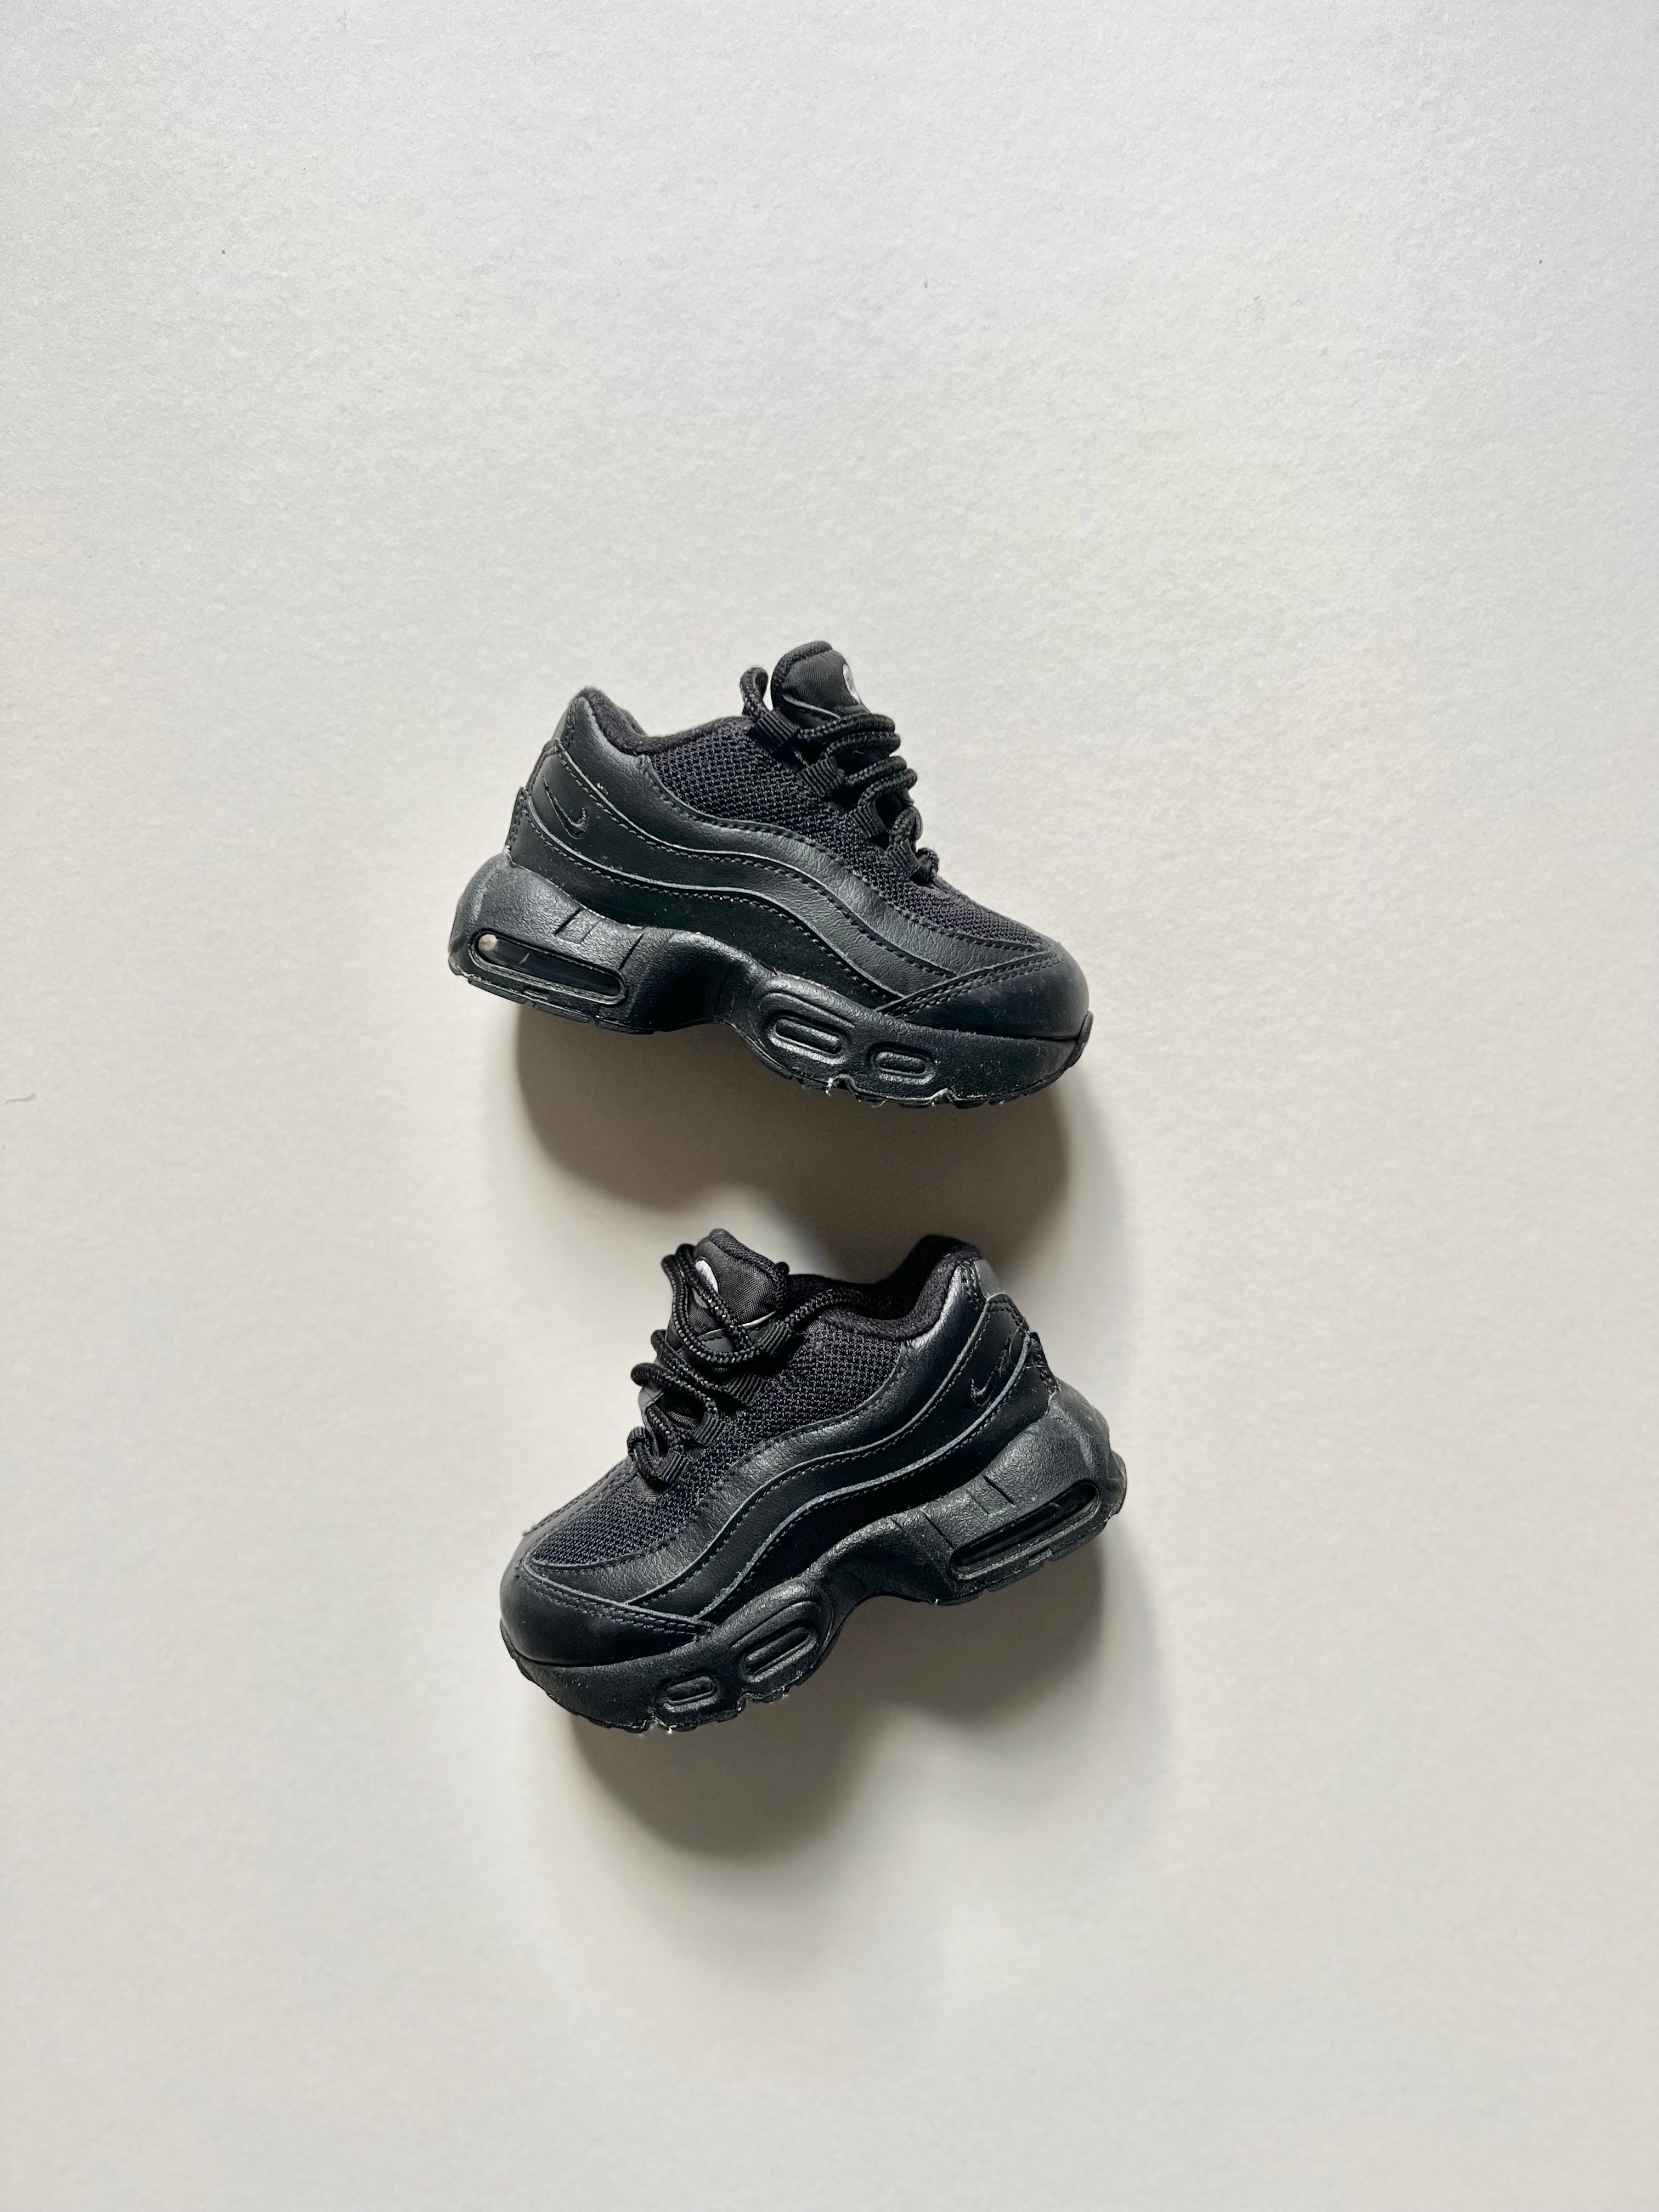 Nike Air Max Black Size 6.5